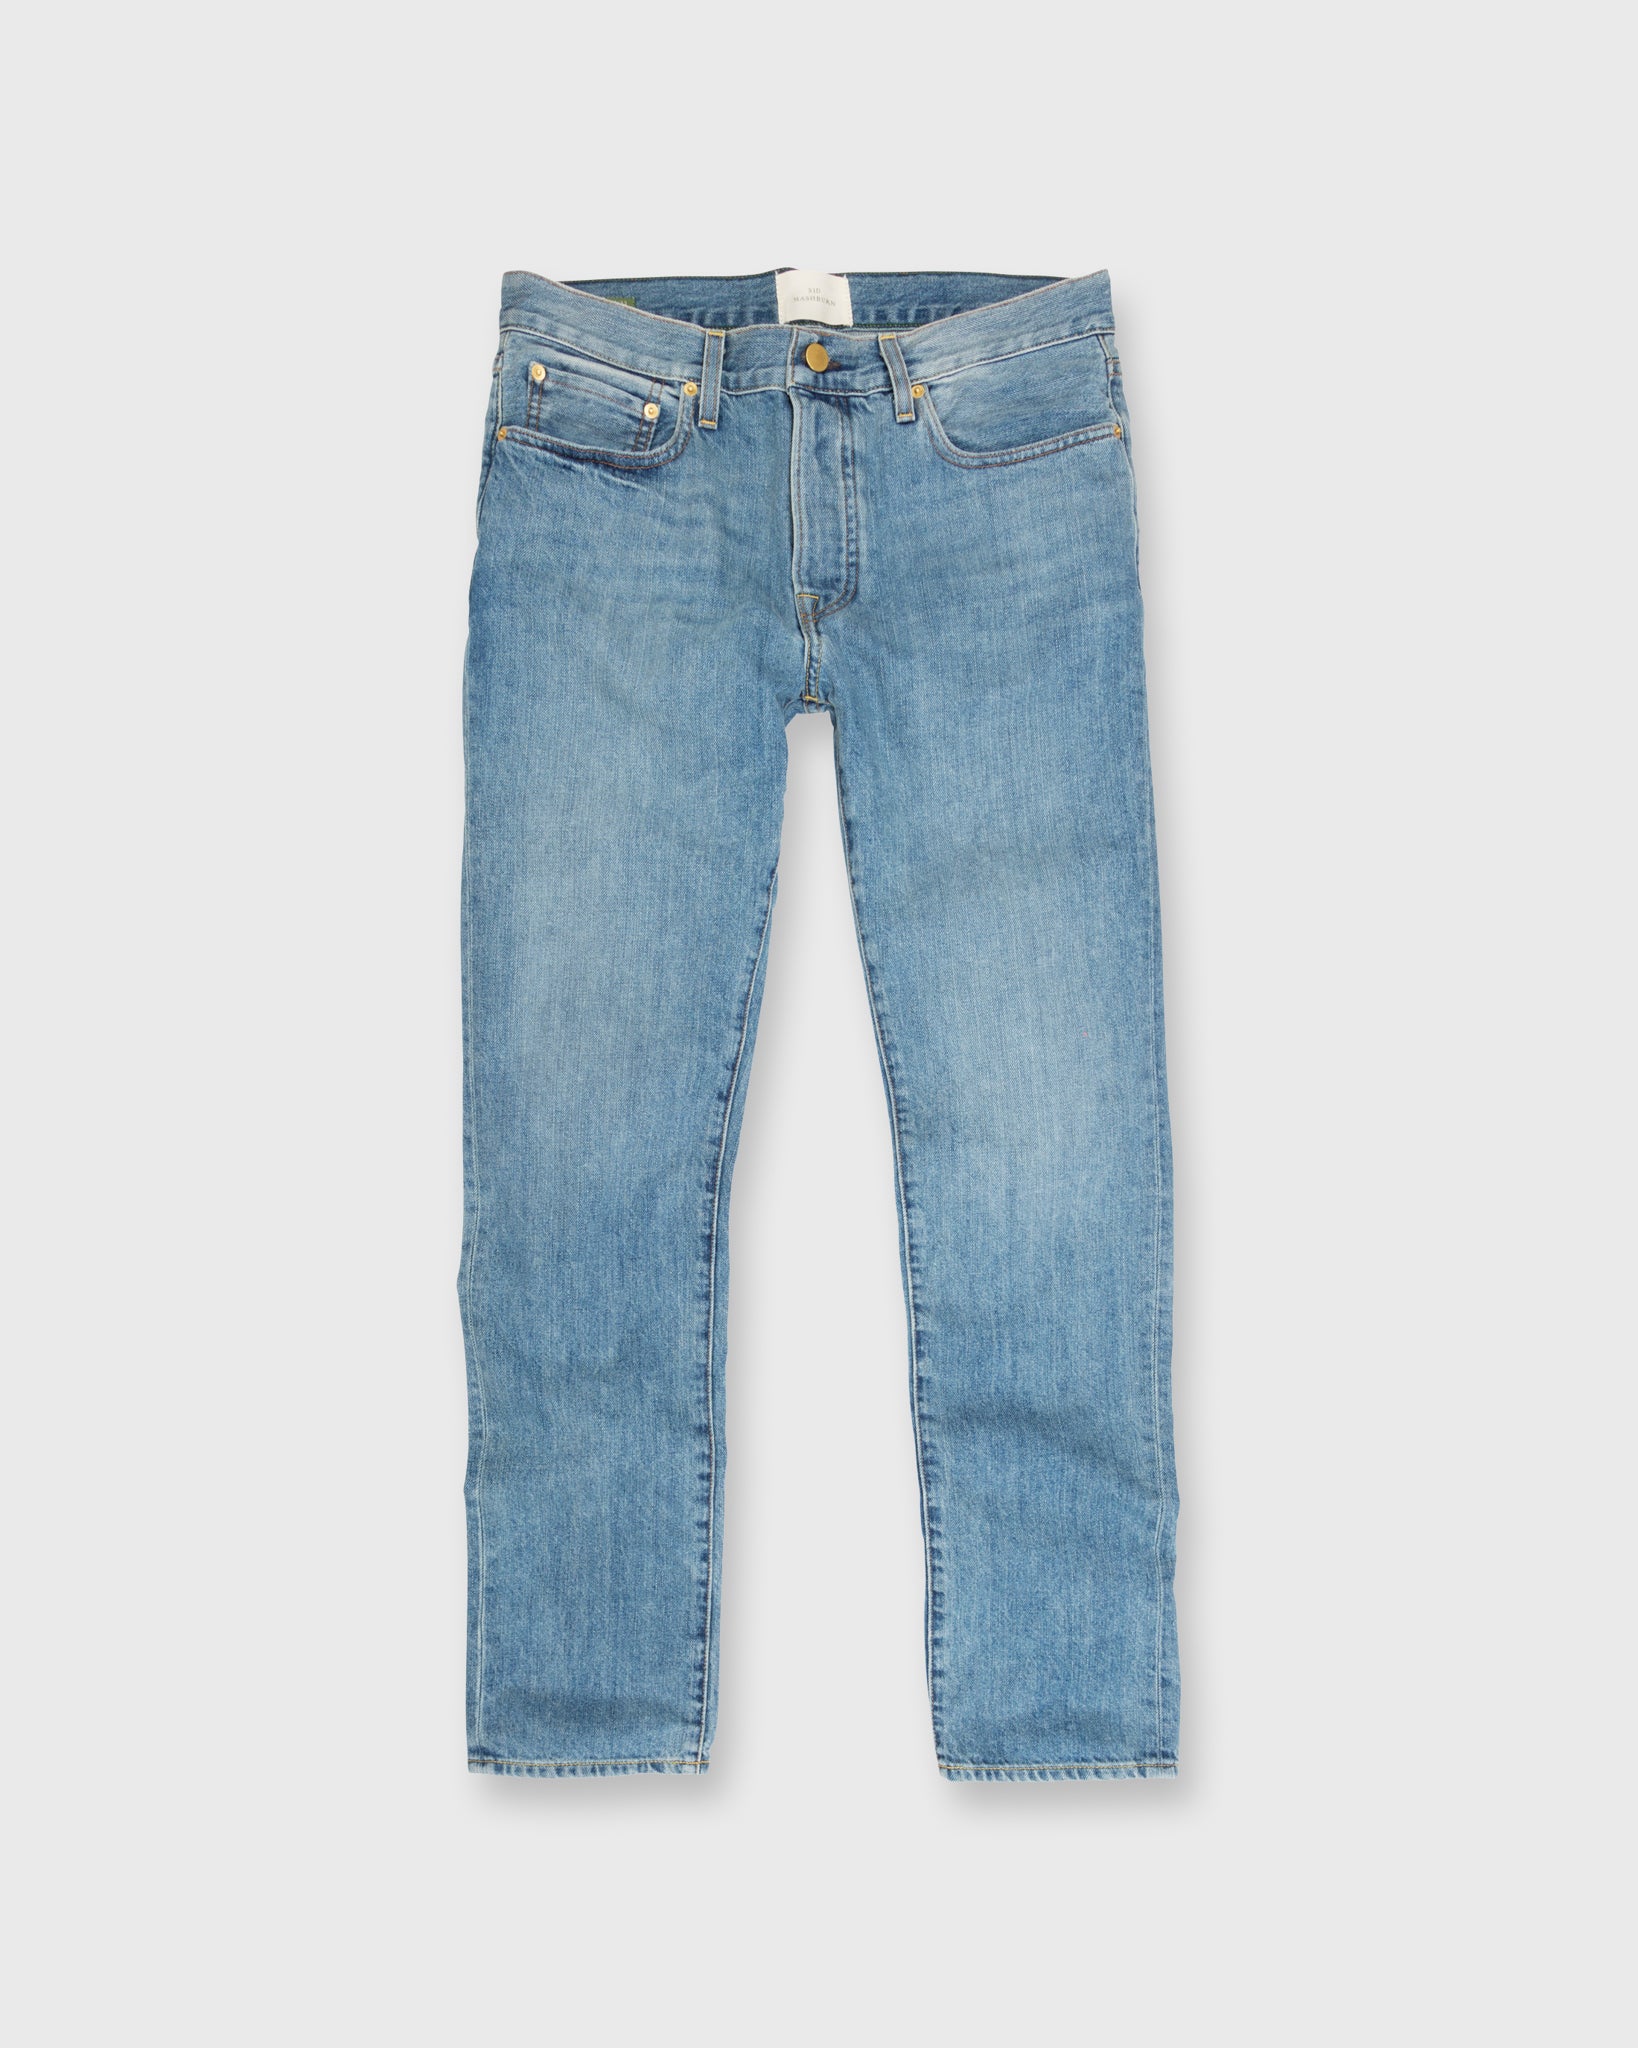 Slim Straight Jean in Non-Selvedge Light Wash Denim | Shop Sid Mashburn